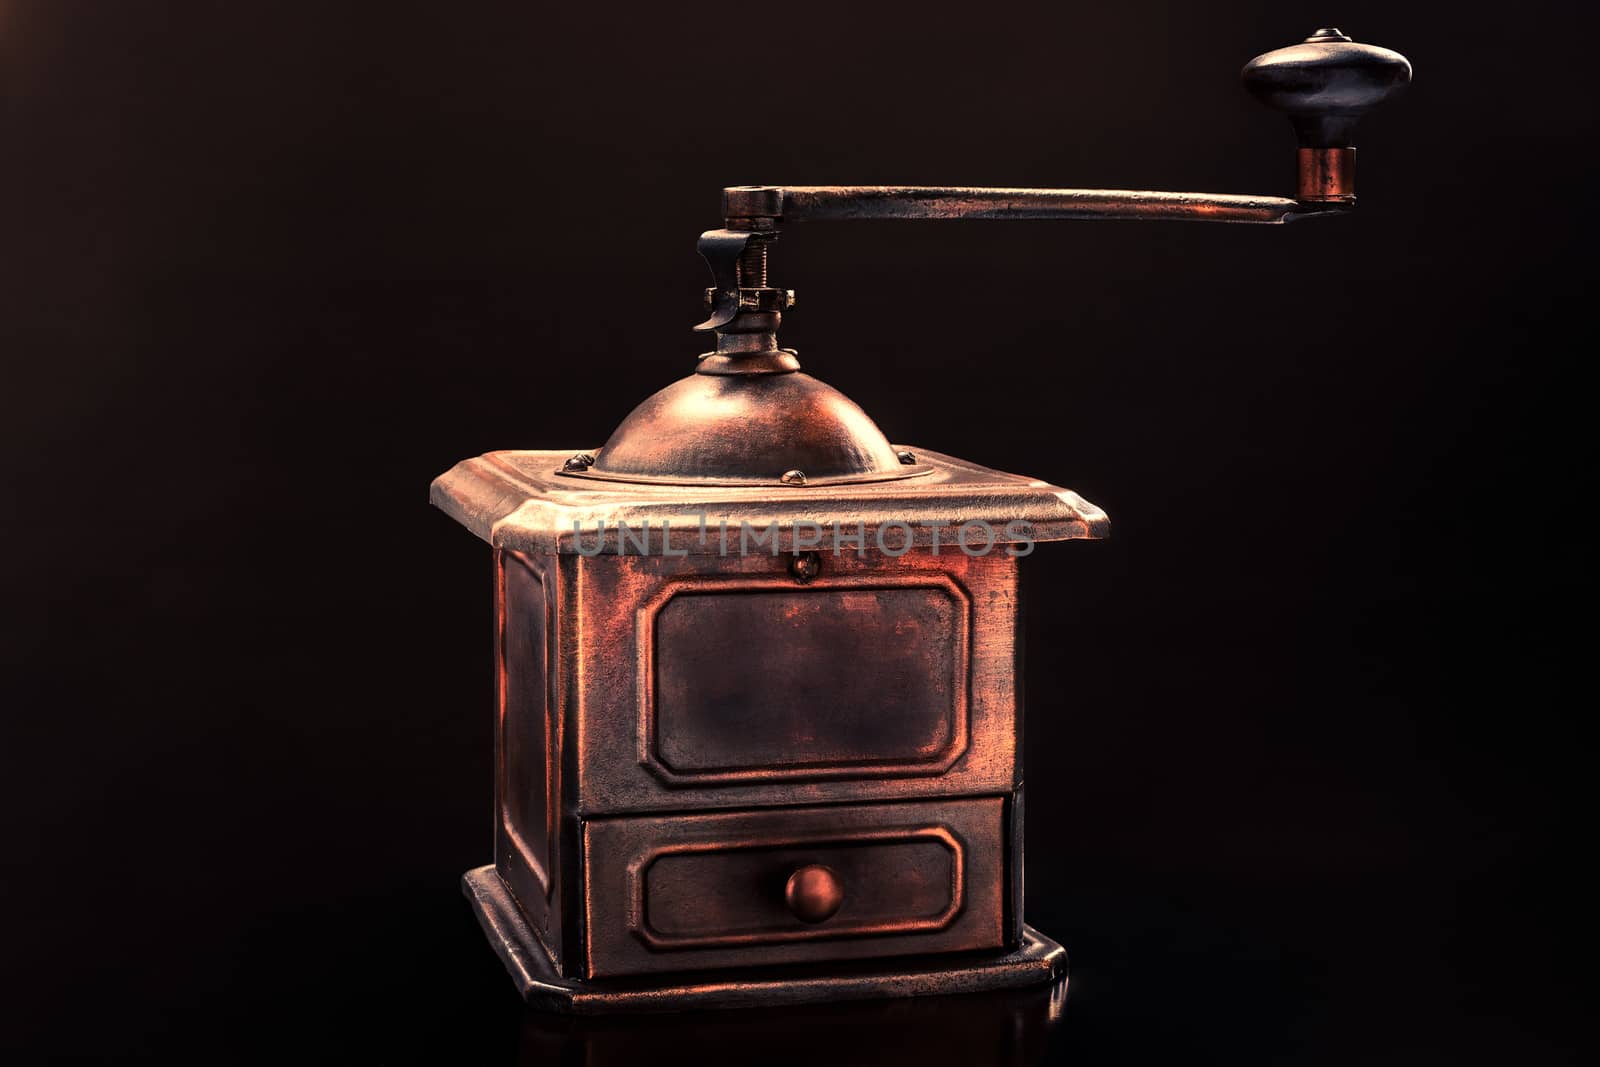 Old coffee grinder on a black background